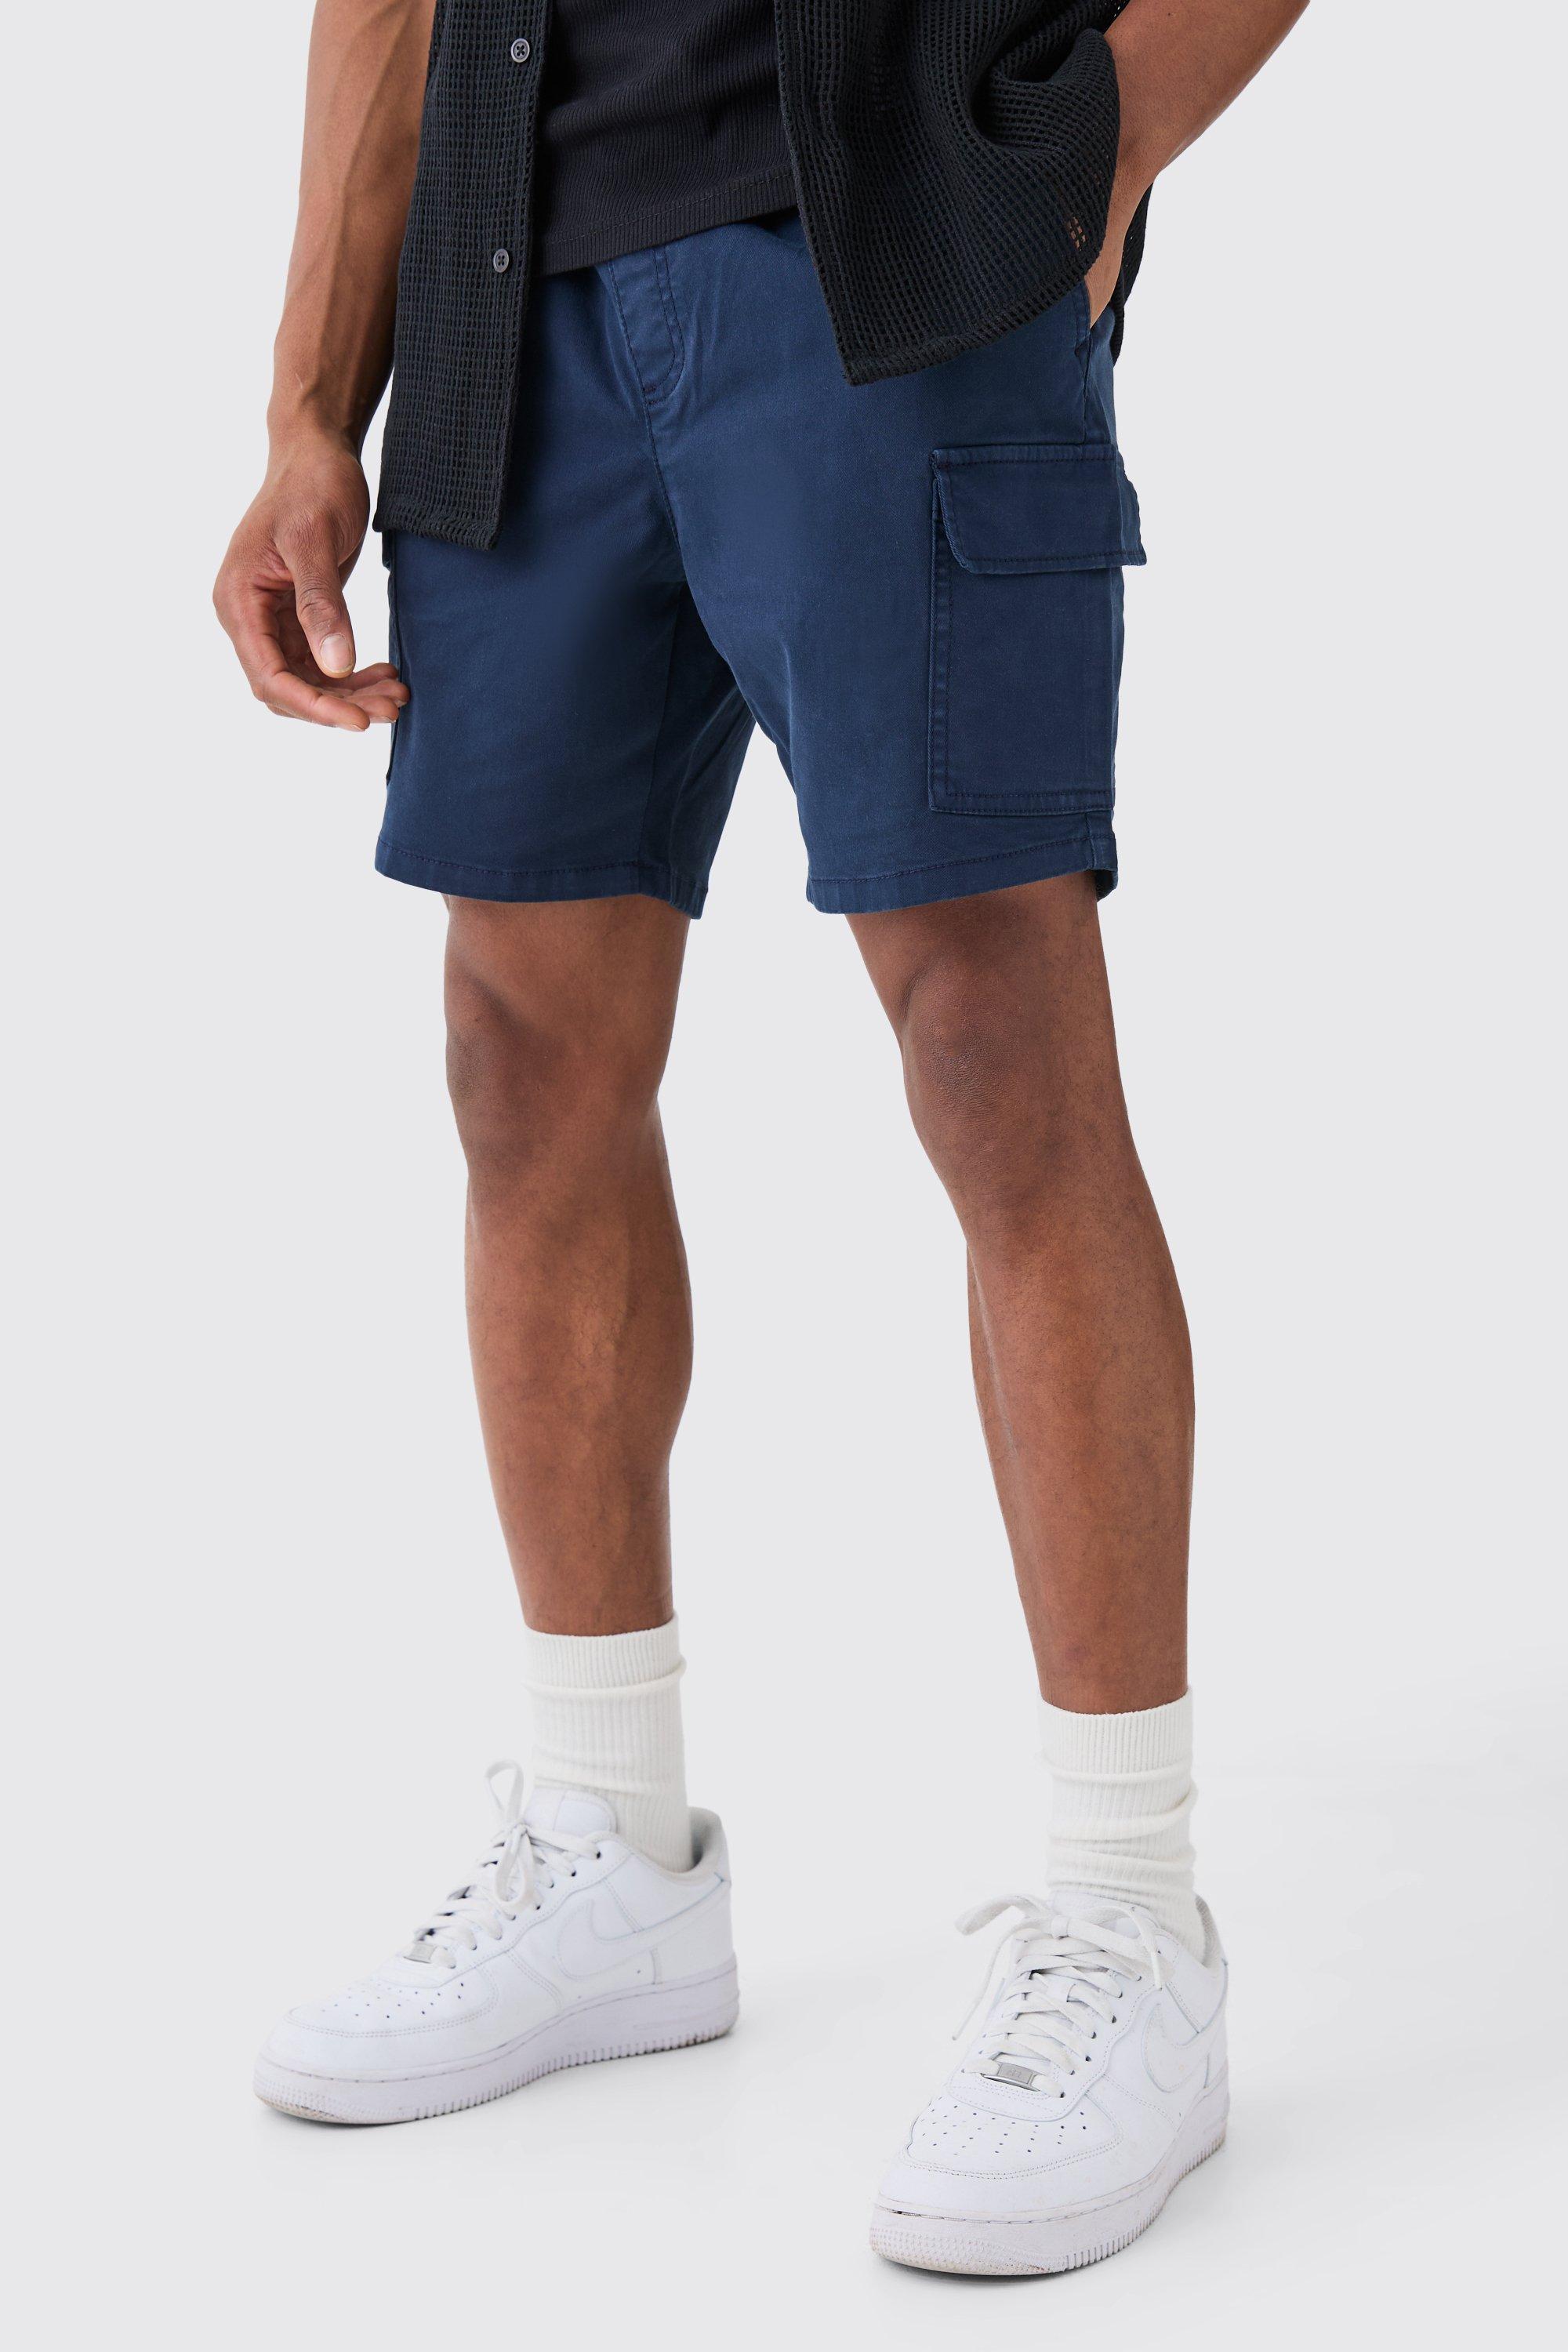 Image of Slim Fit Cargo Shorts, Navy